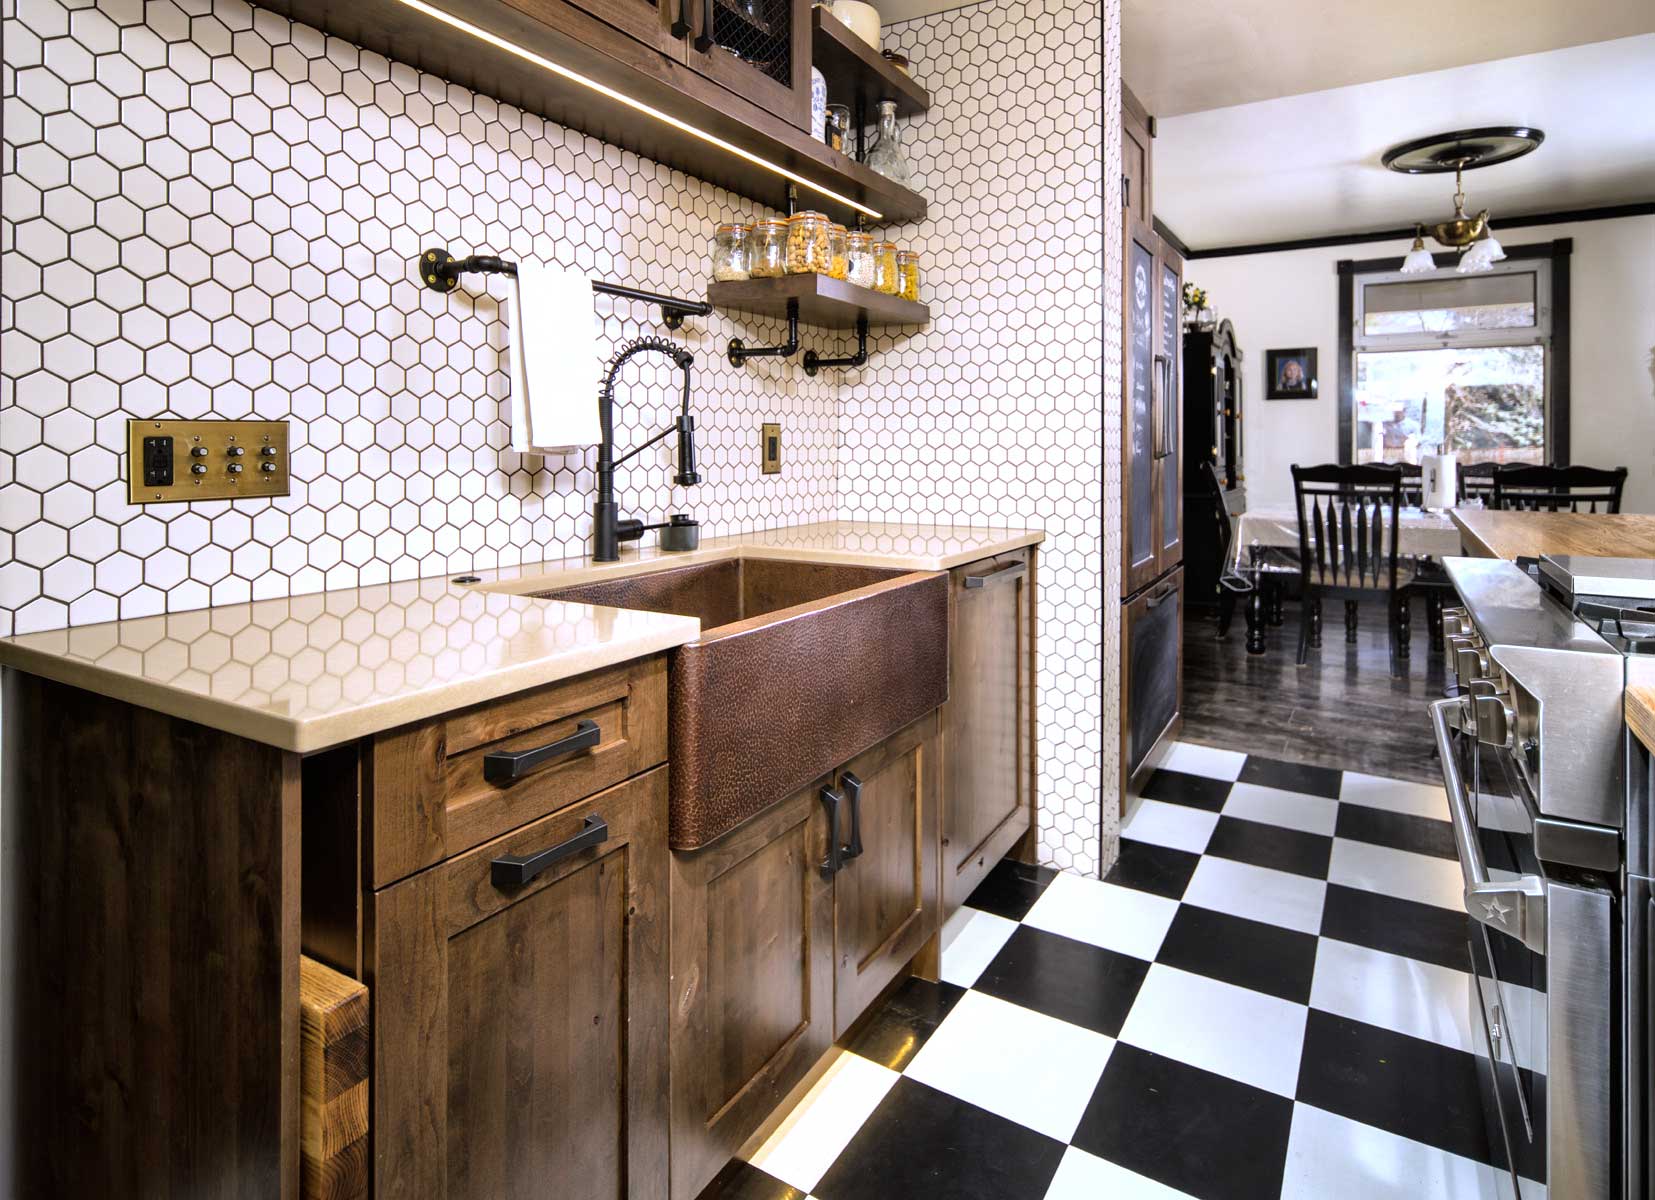 Stylish Steampunk Kitchen - The Cabinet Company